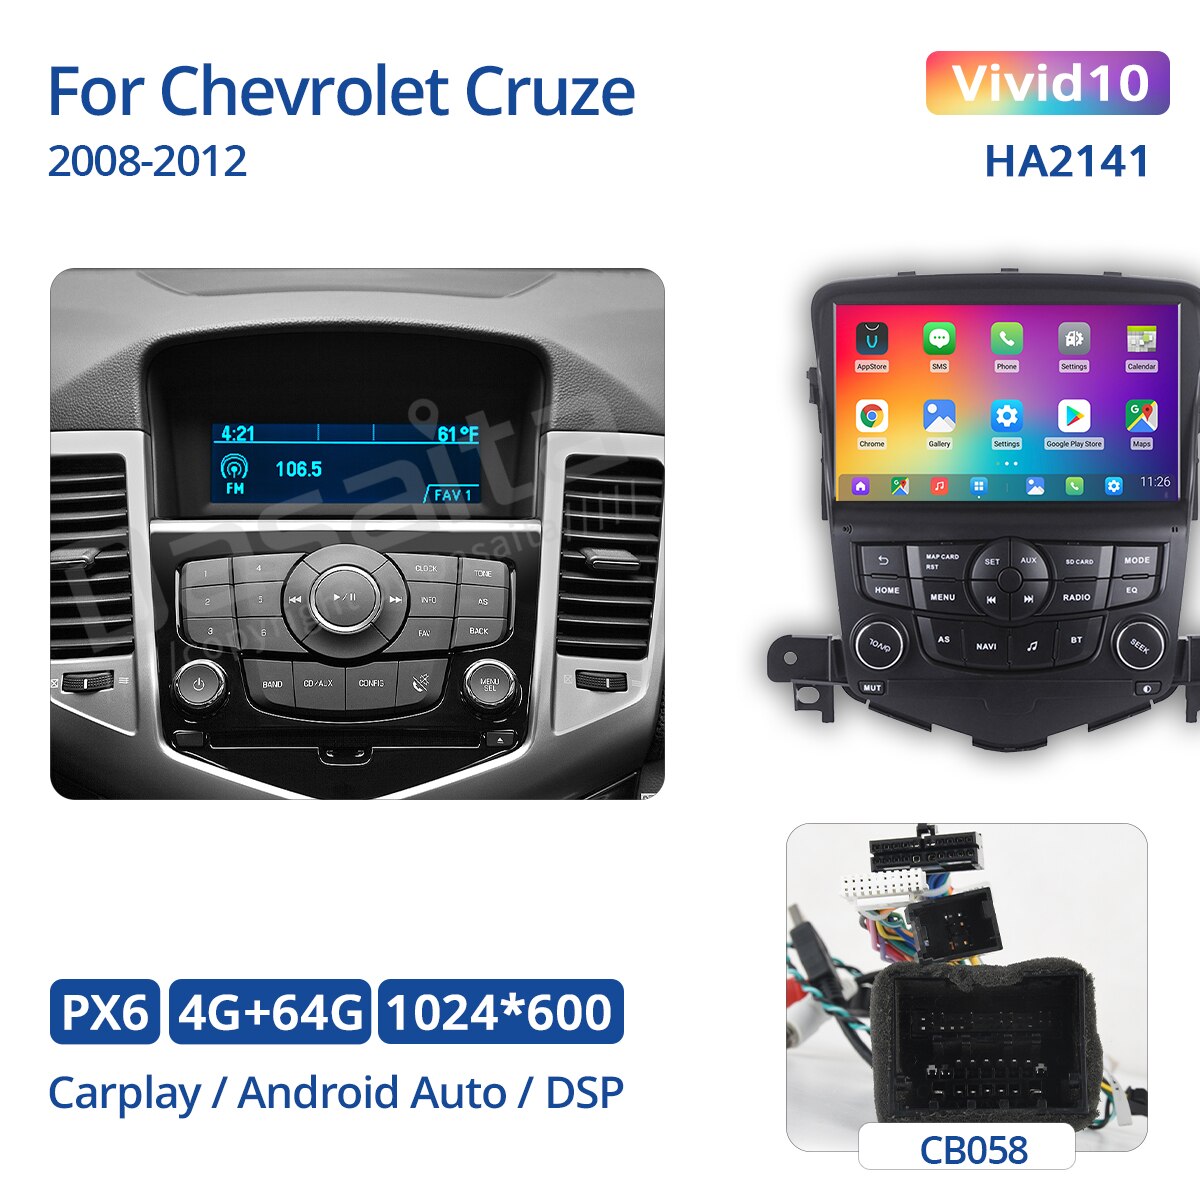 Dasaita Vivid for Chevrolet Cruze 2008 2009 2010 2011 Car 2 Din Android 10.0 Auto Radio 8" Multi Touch Screen Navigation TDA7850